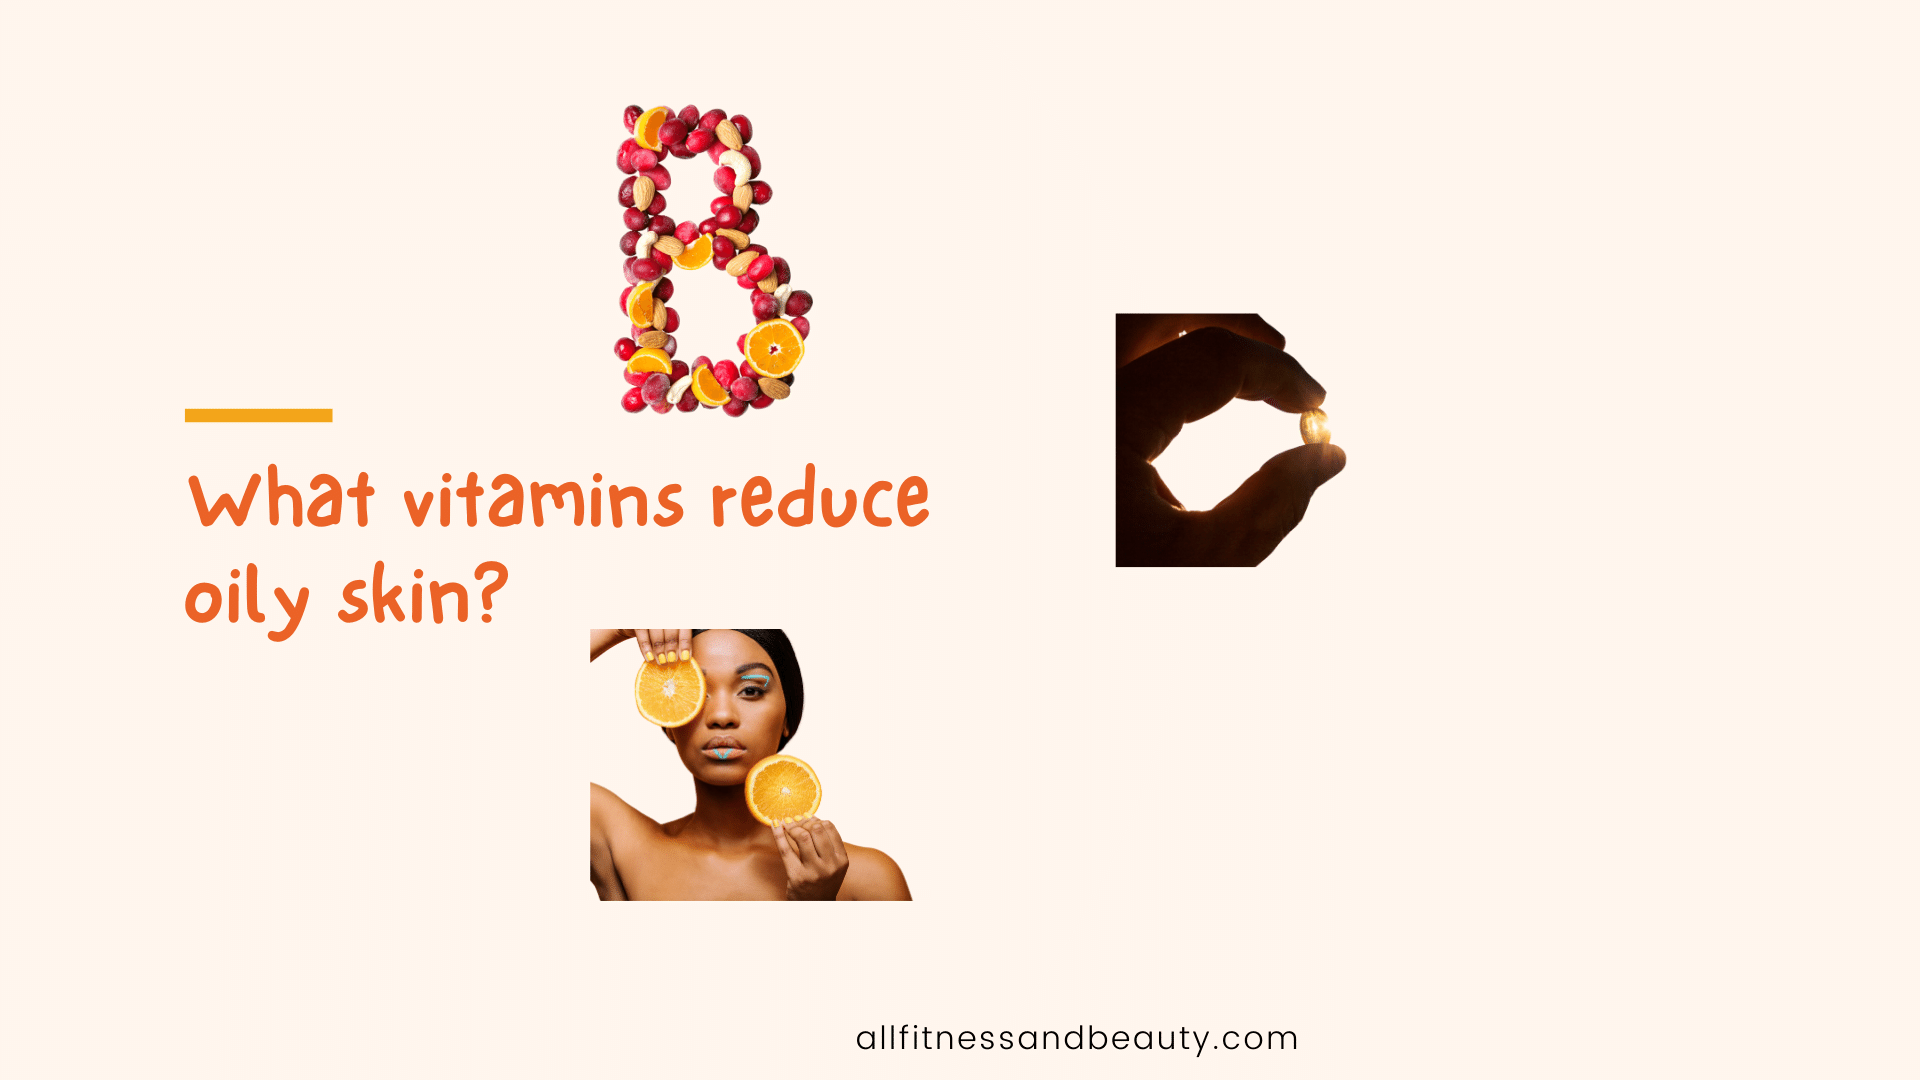 What vitamins reduce oily skin